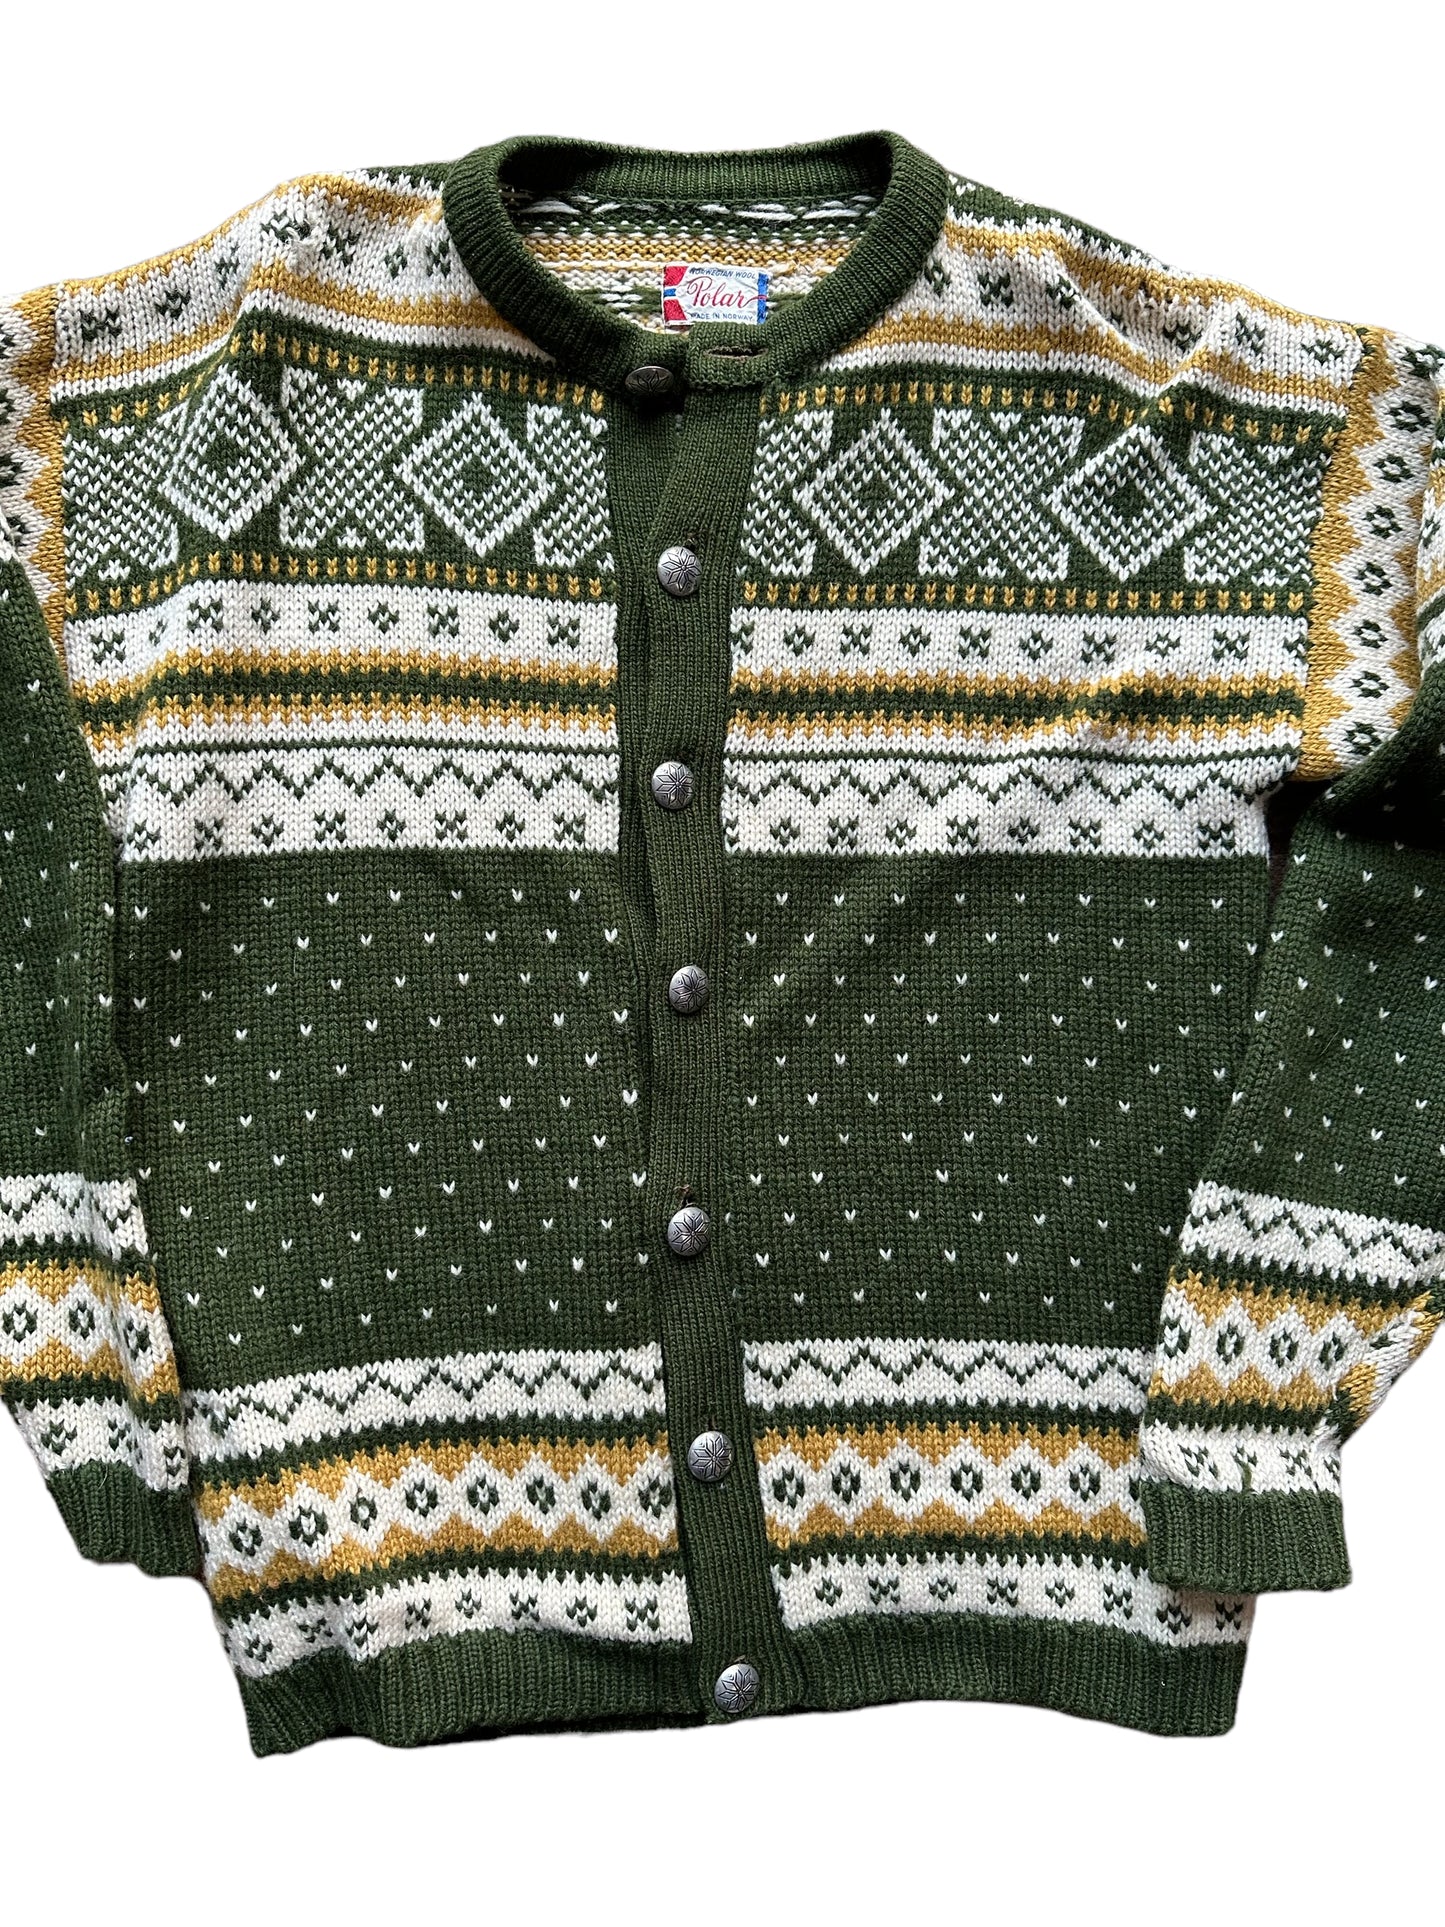 Front Detail of Vintage Polar Brand Norwegian Wool Sweater SZ M |  Vintage Norwegian Sweaters Seattle | Barn Owl Vintage Seattle